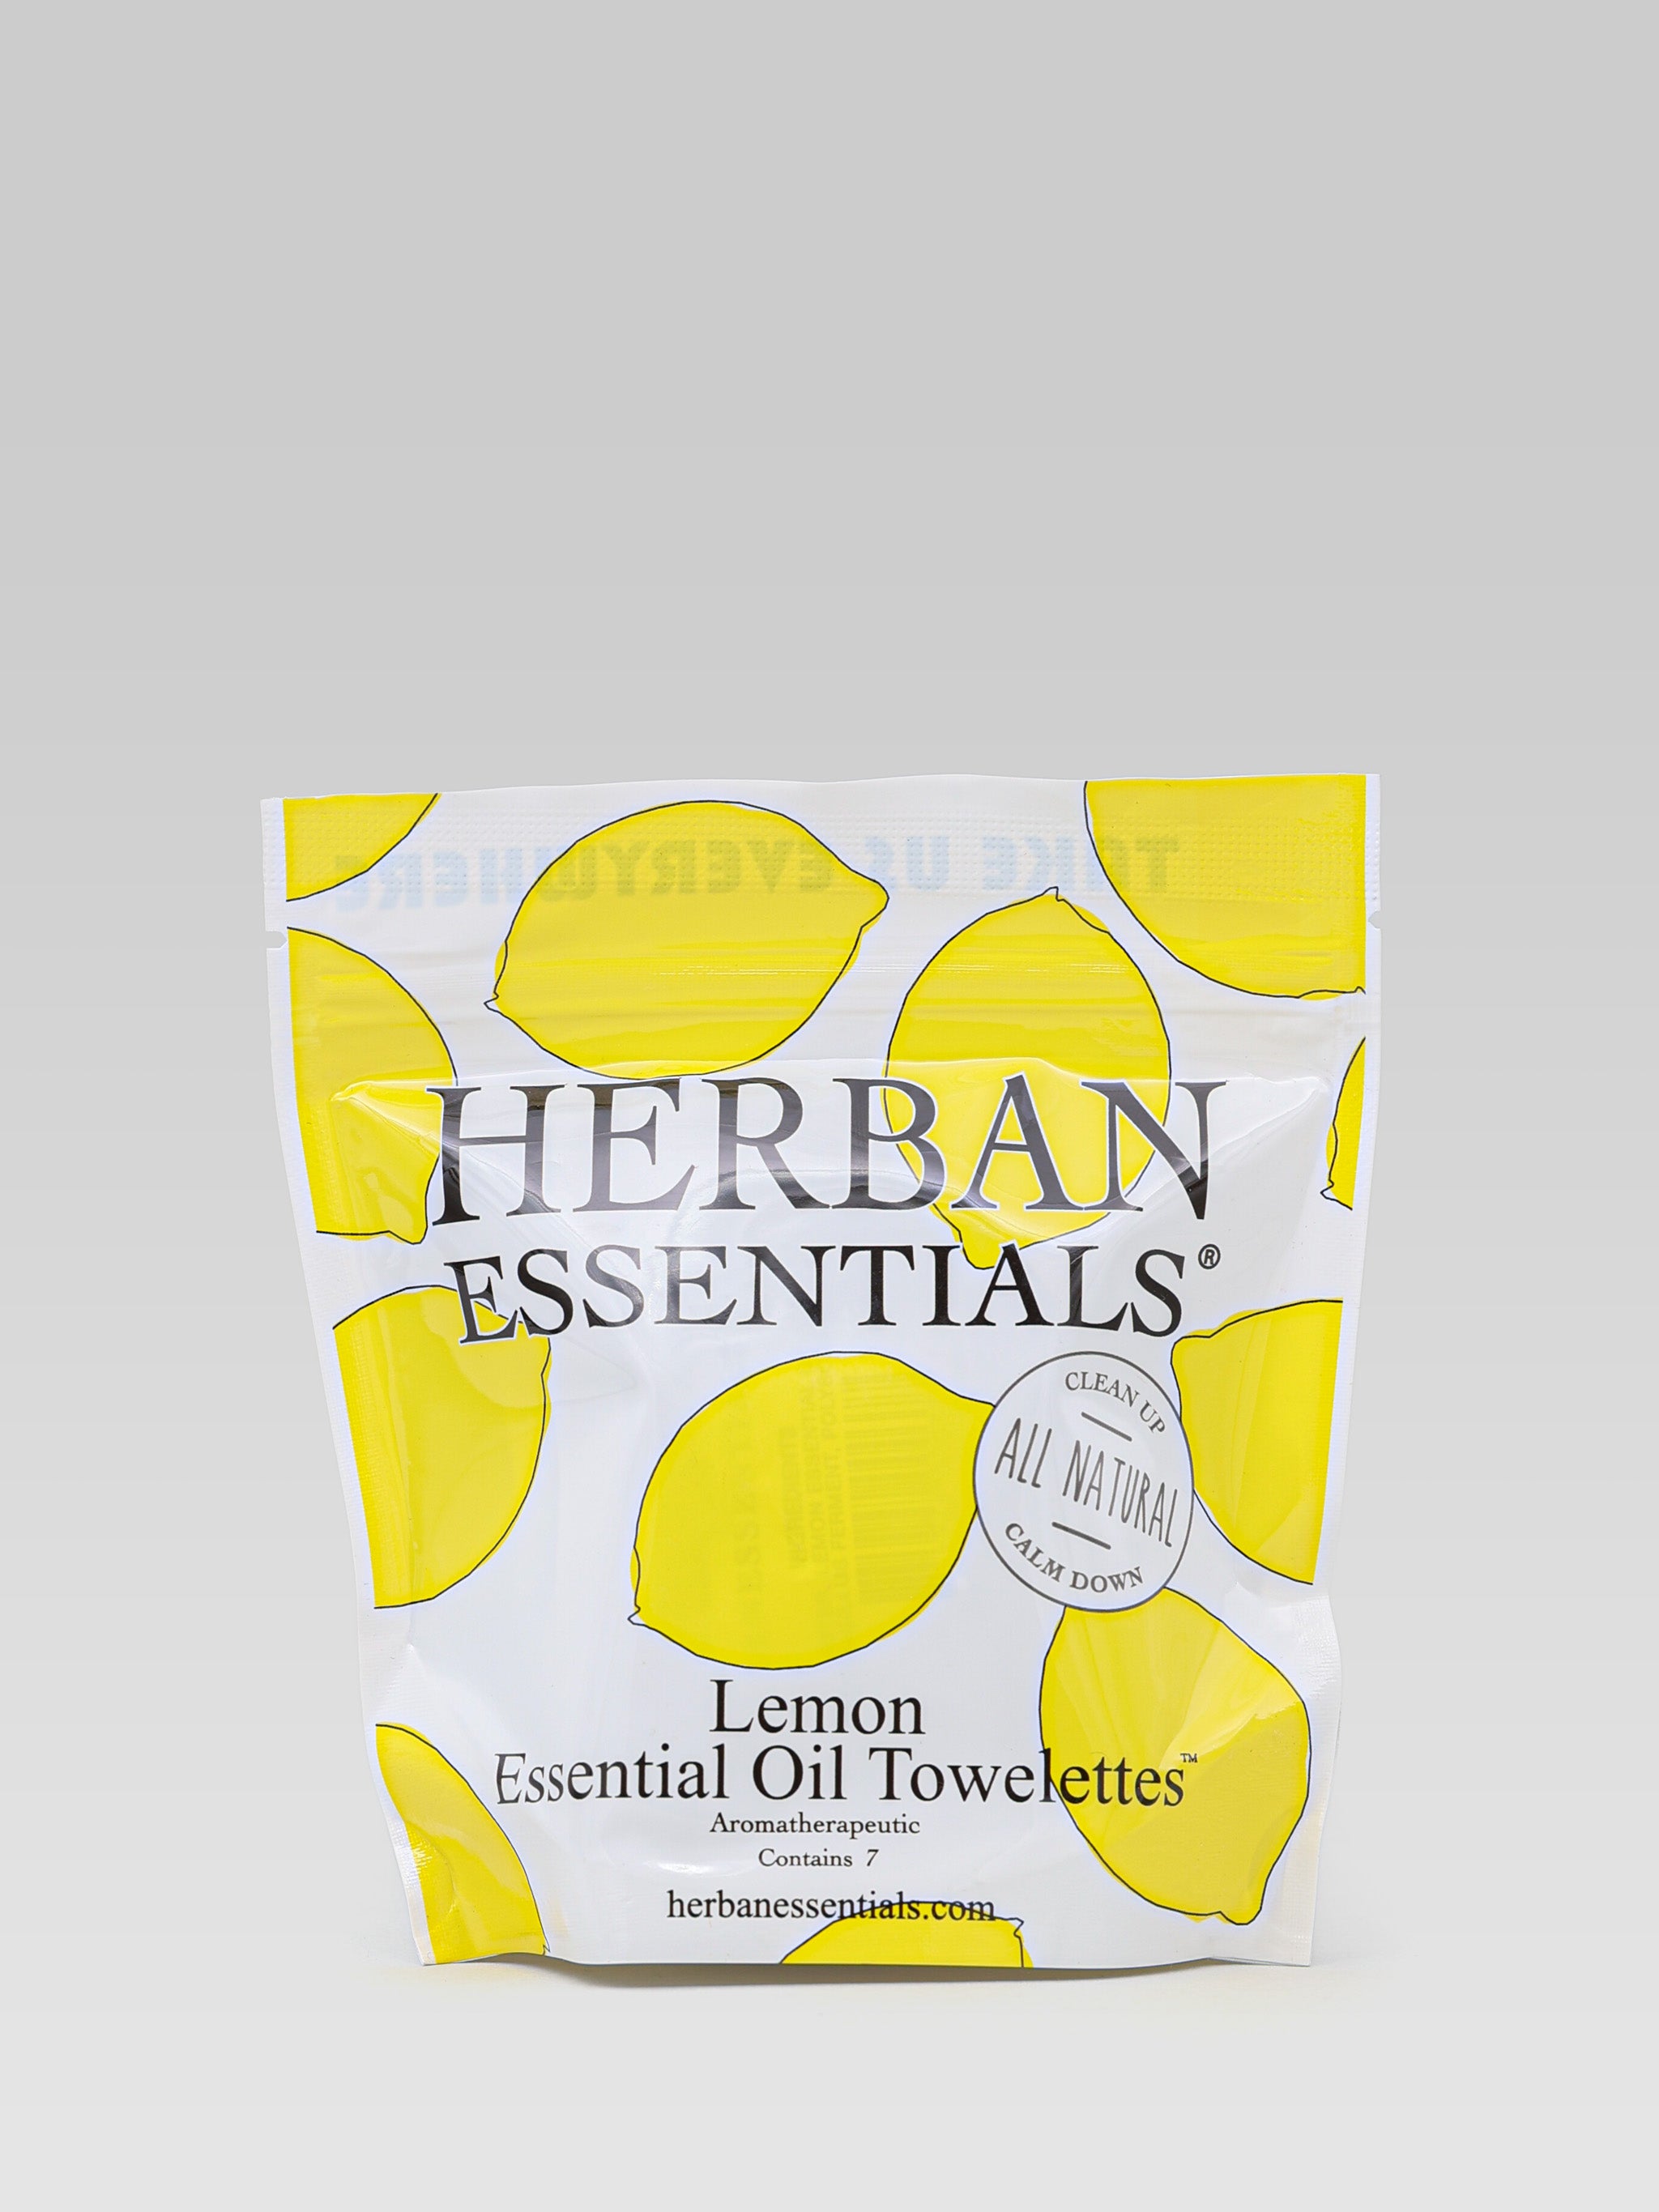 Herban Essentials Lemon Essential Oil Towelettes